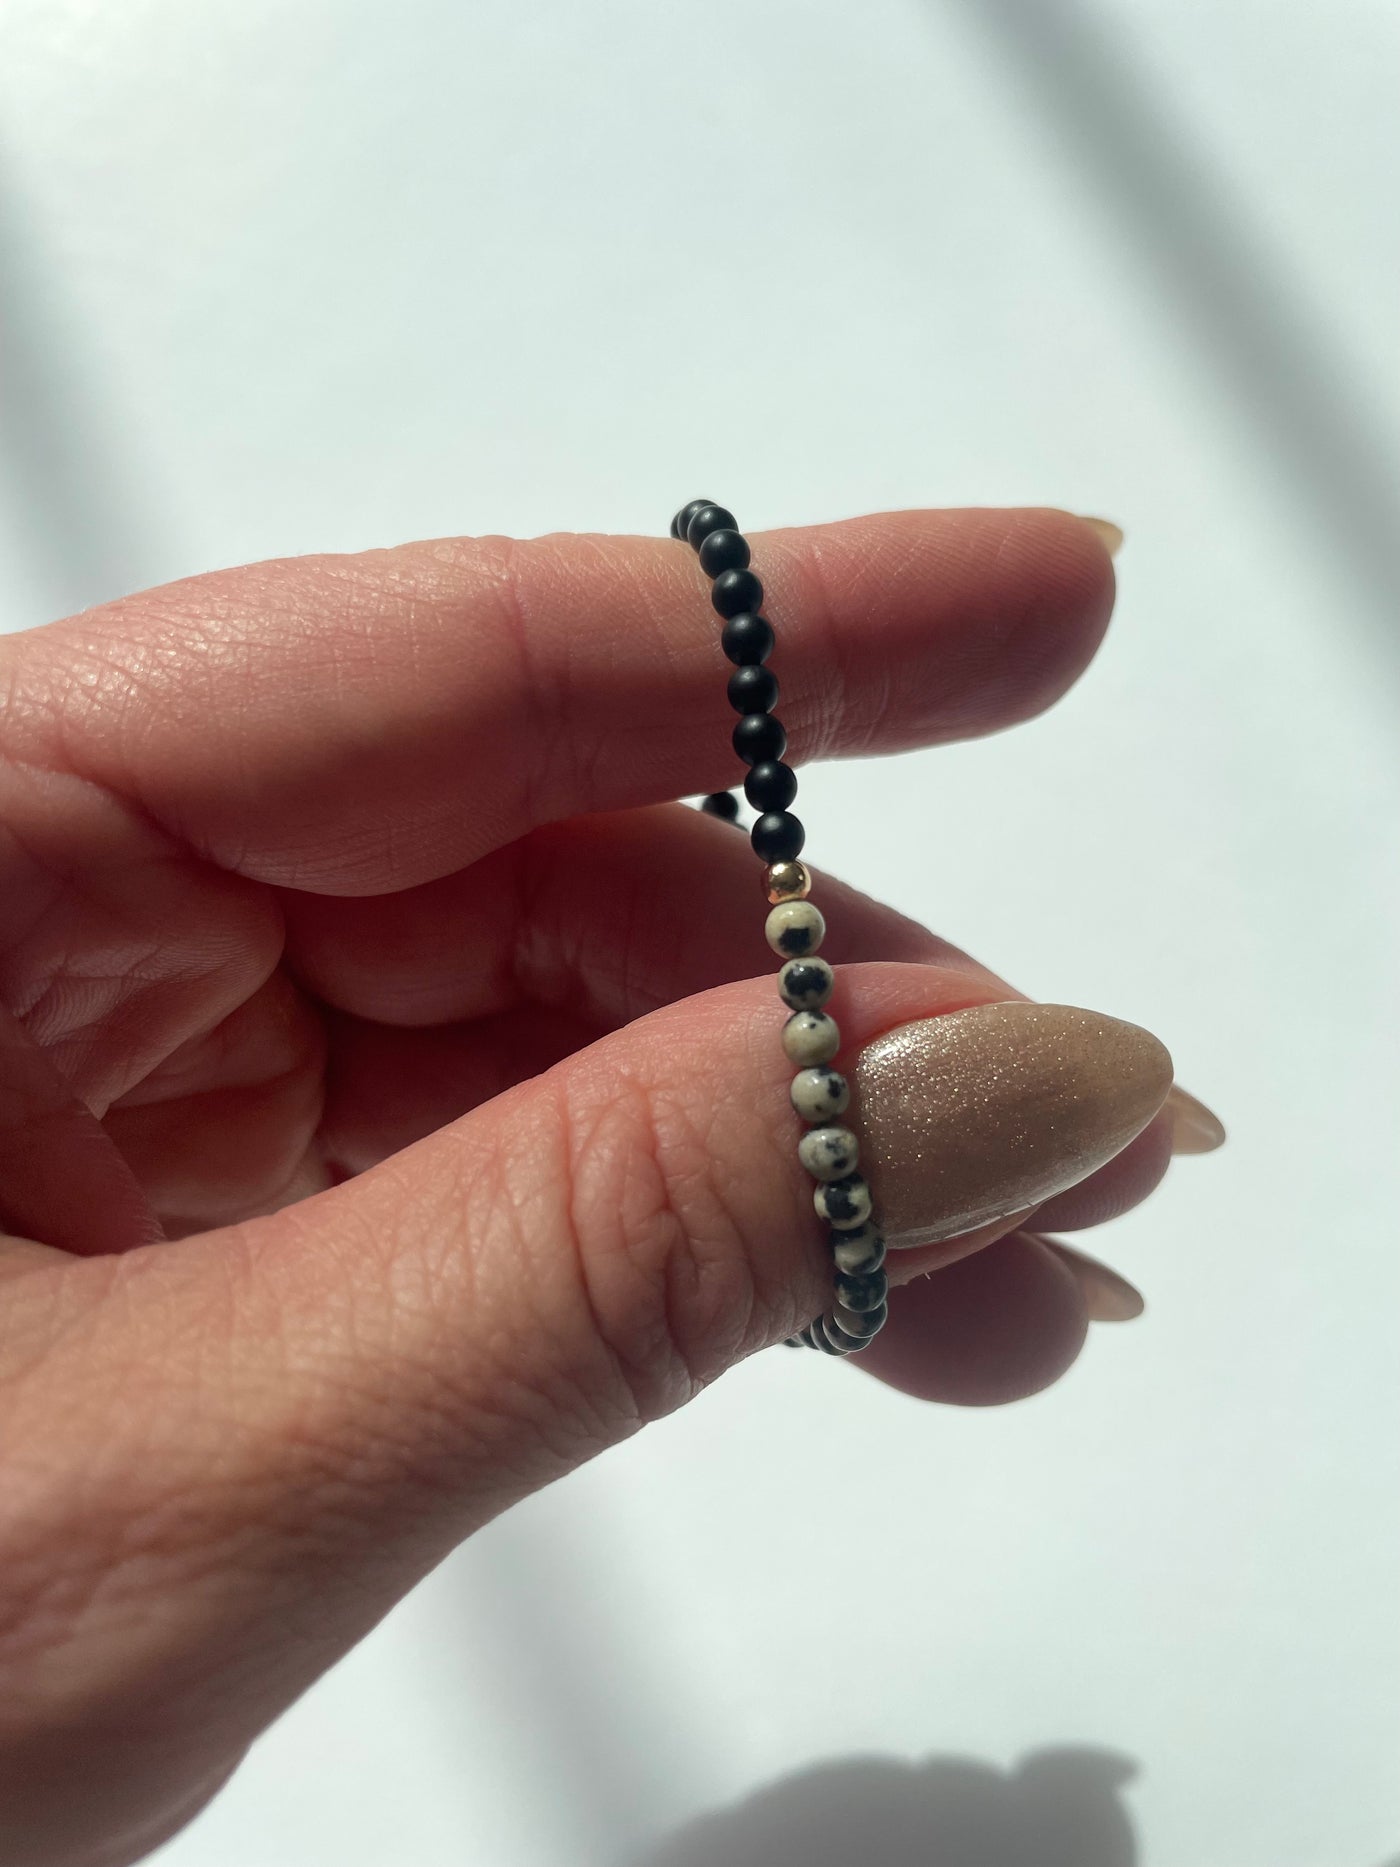 Dalmatian Stone and Matte Onyx Duality Bracelet